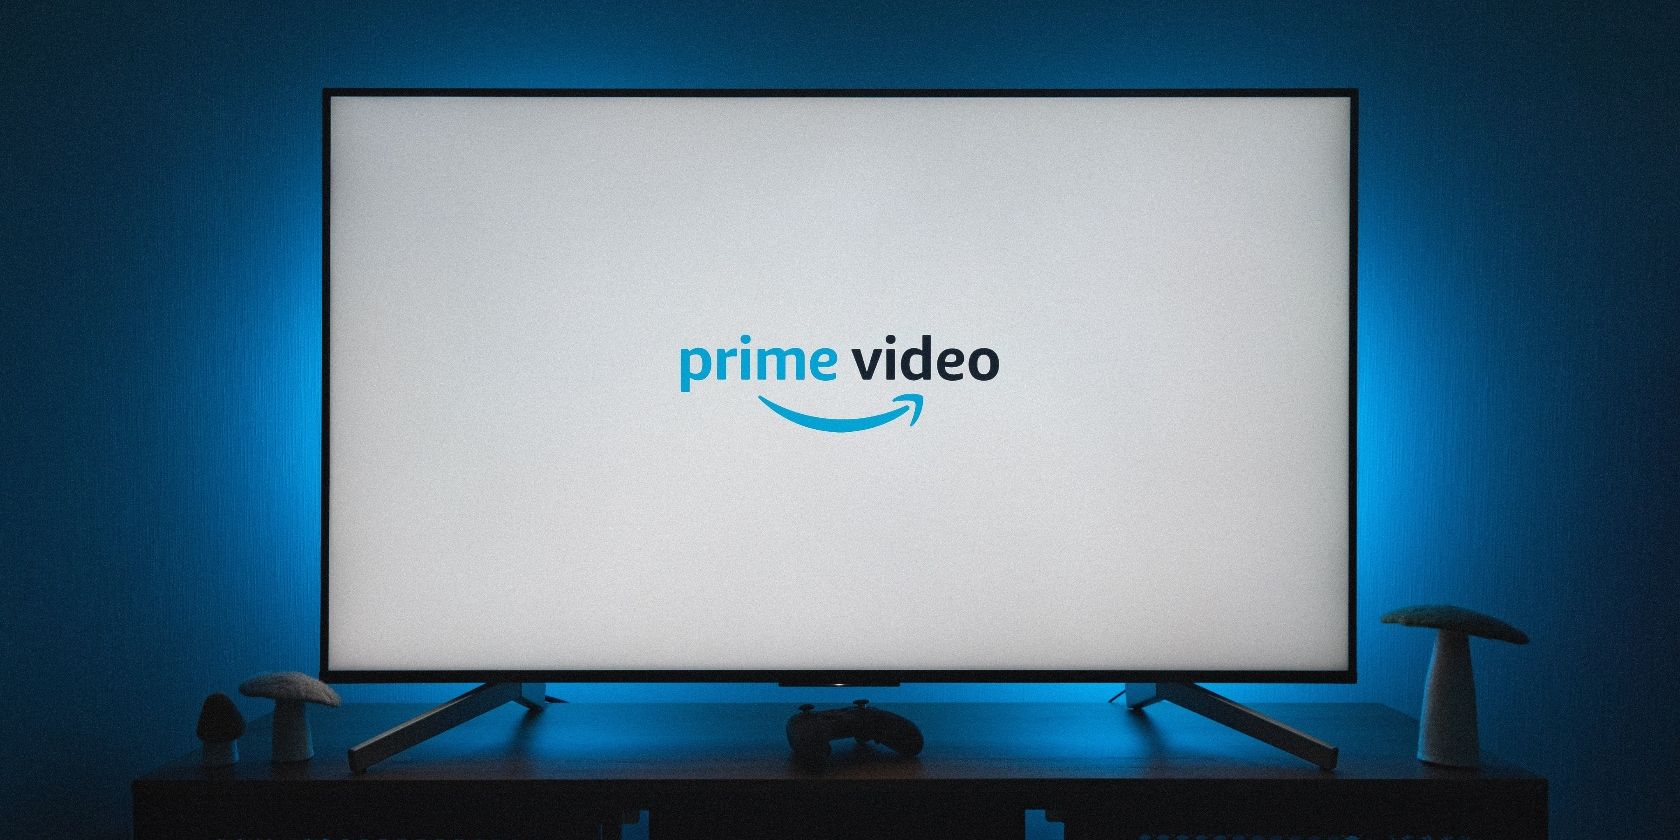 amazon prime video logo on tv screen